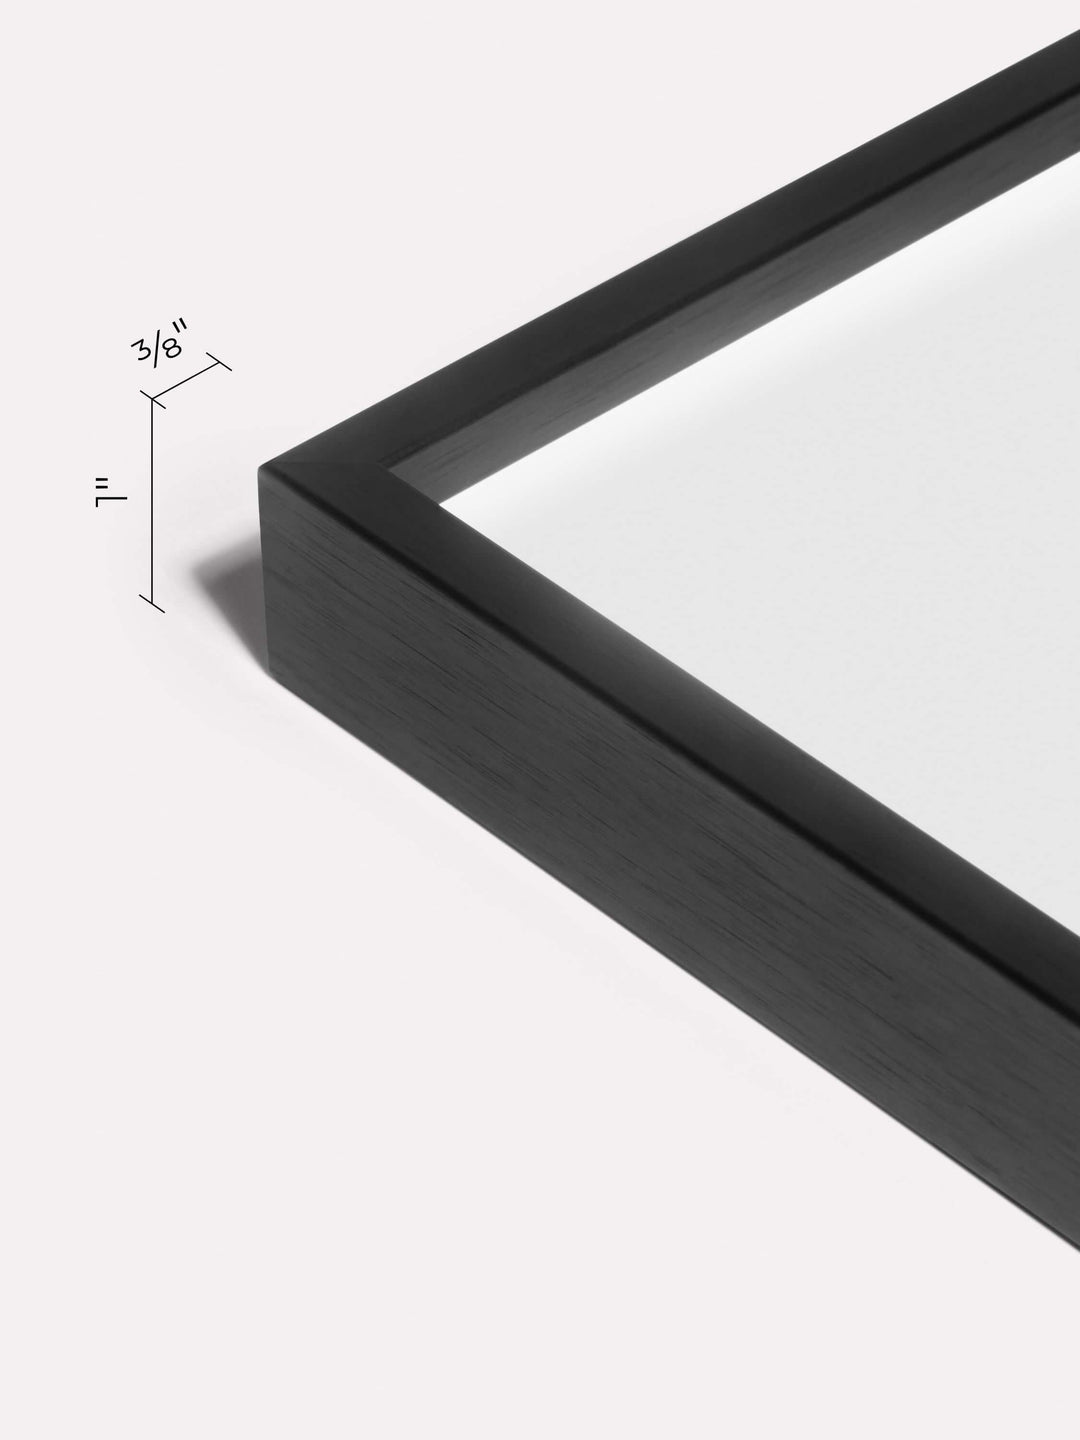 20x30-inch Thin Frame, Black - Close-up view